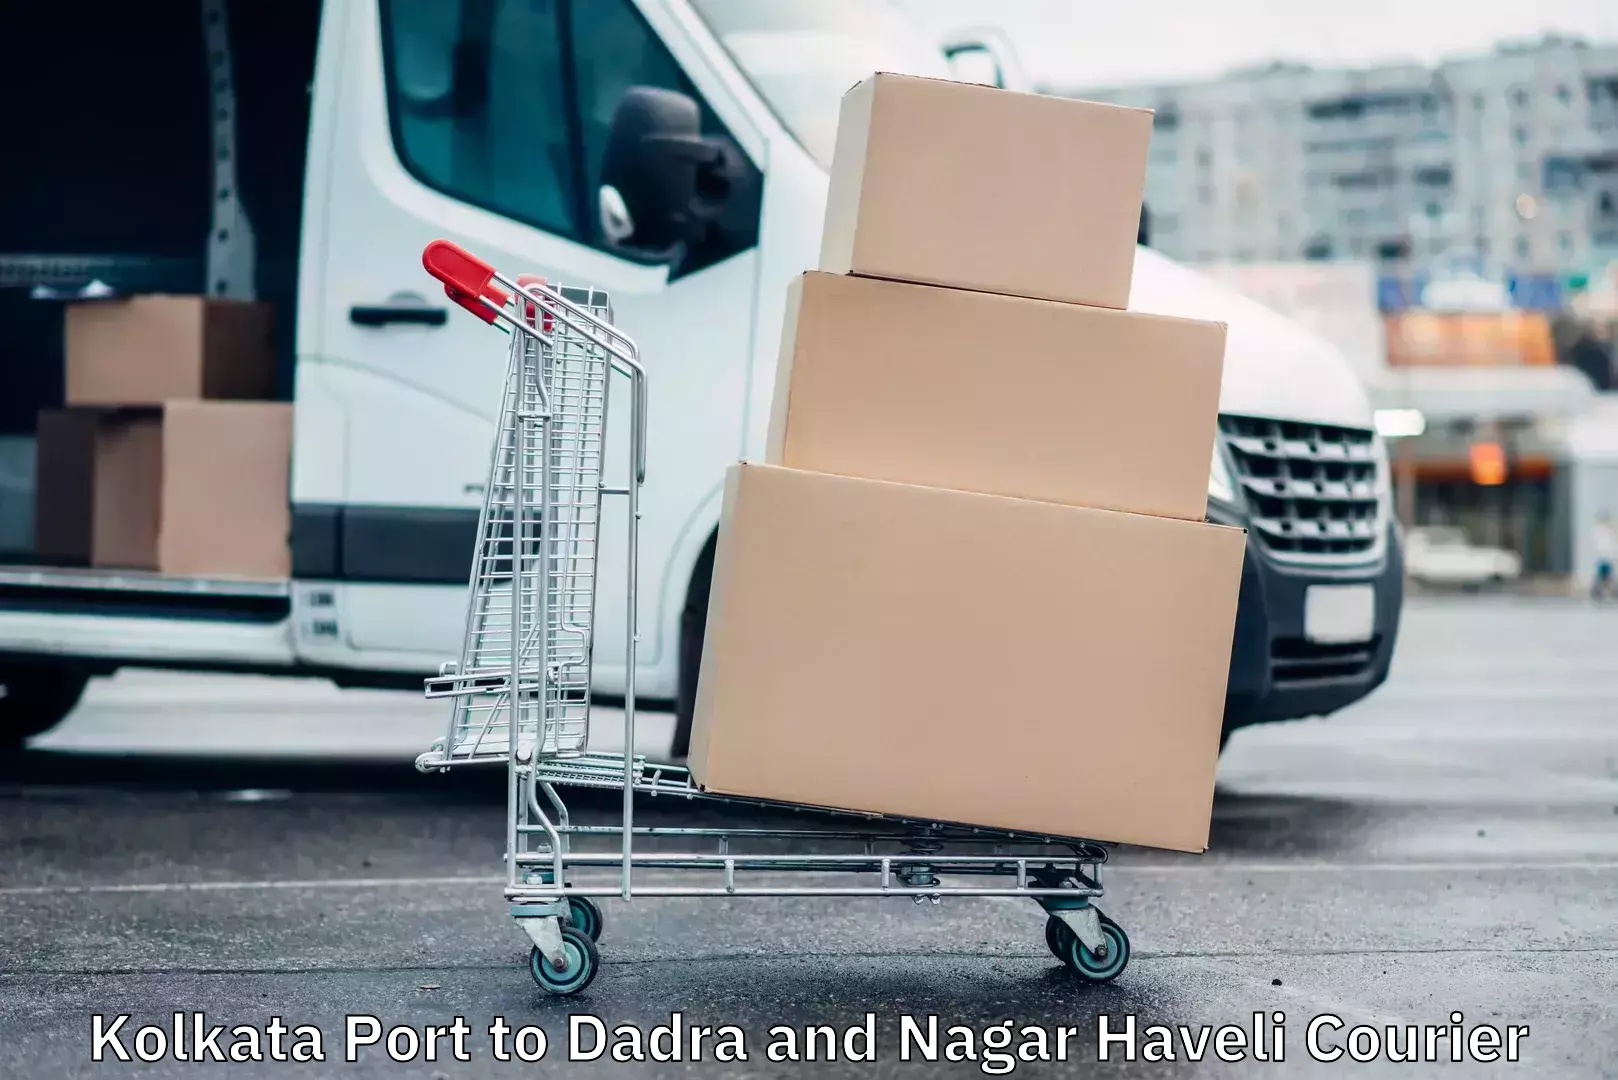 Express delivery capabilities Kolkata Port to Dadra and Nagar Haveli